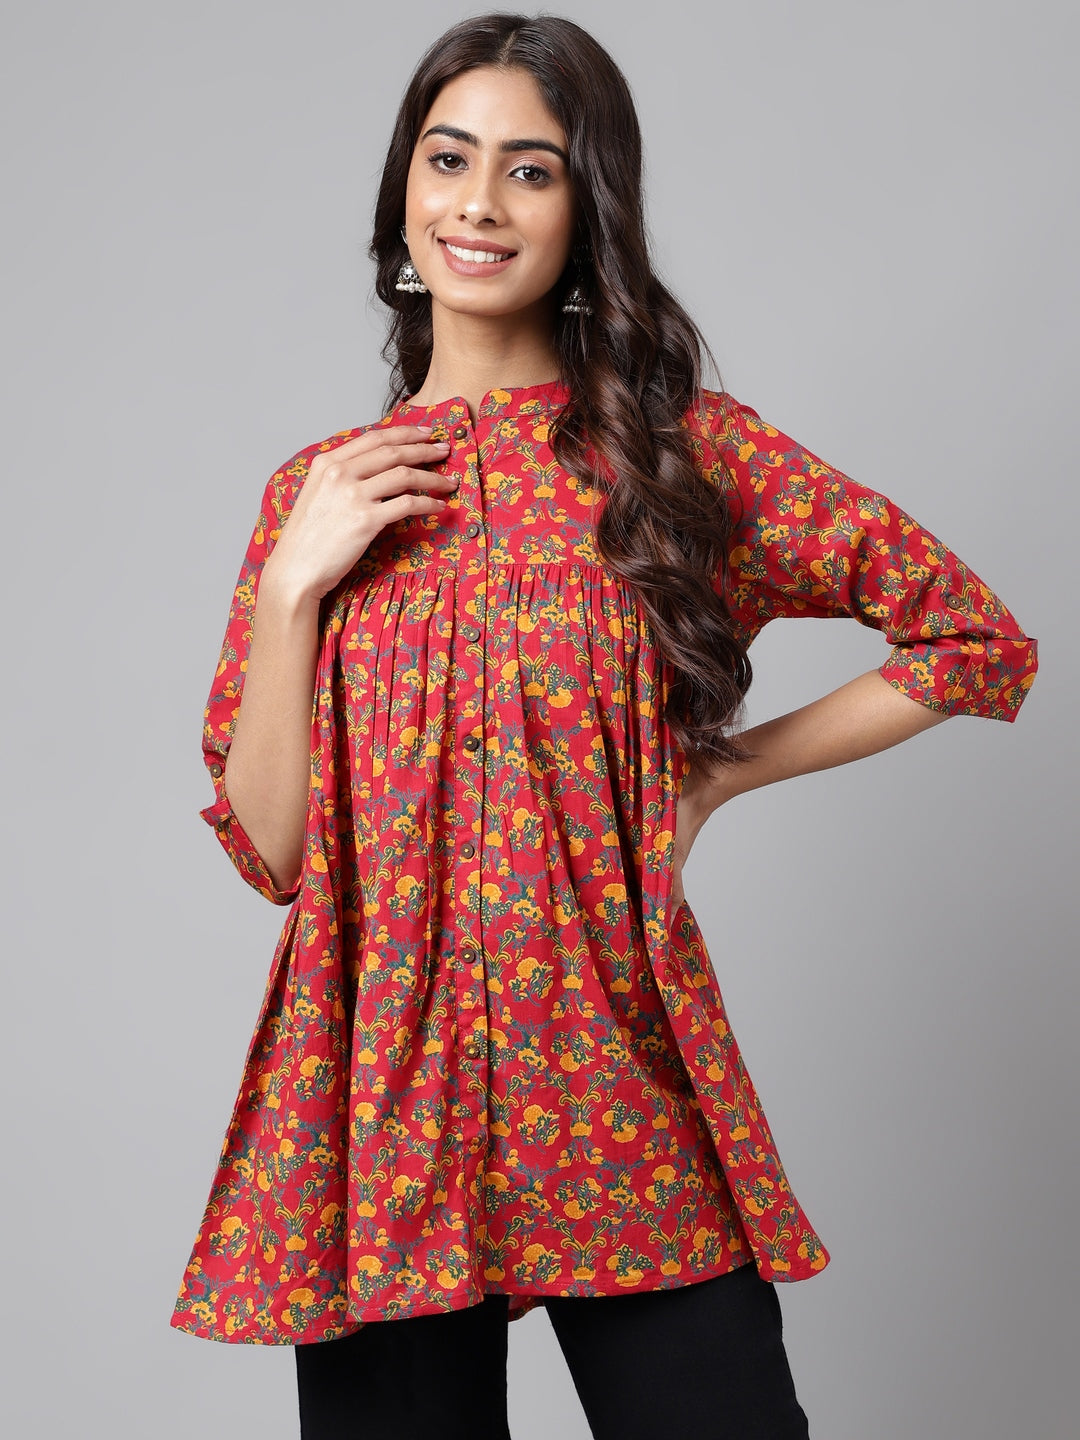 Women's Floral Printed Red Cotton Tunics - Janasya